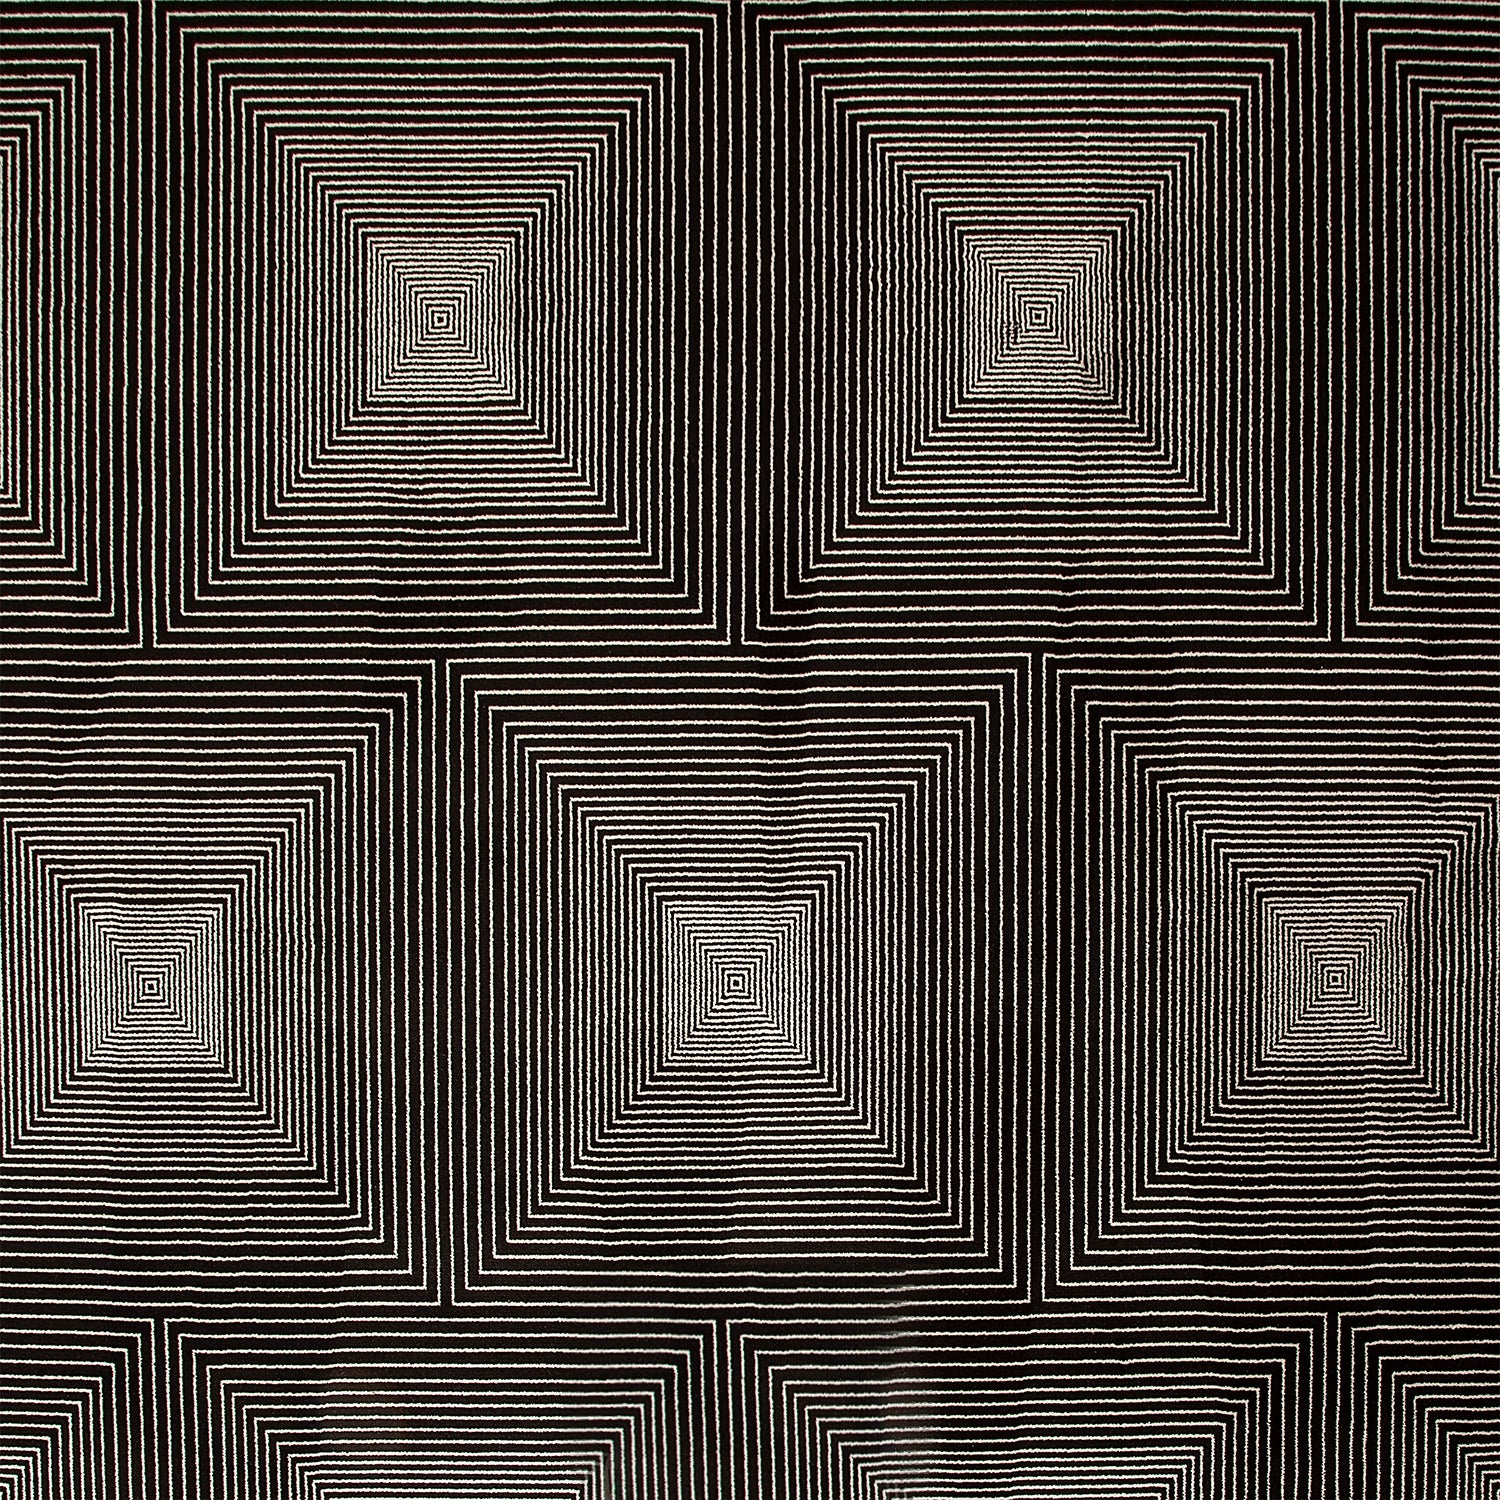 Wool-silk broadloom carpet swatch in a dense linear square print in white on a black field.